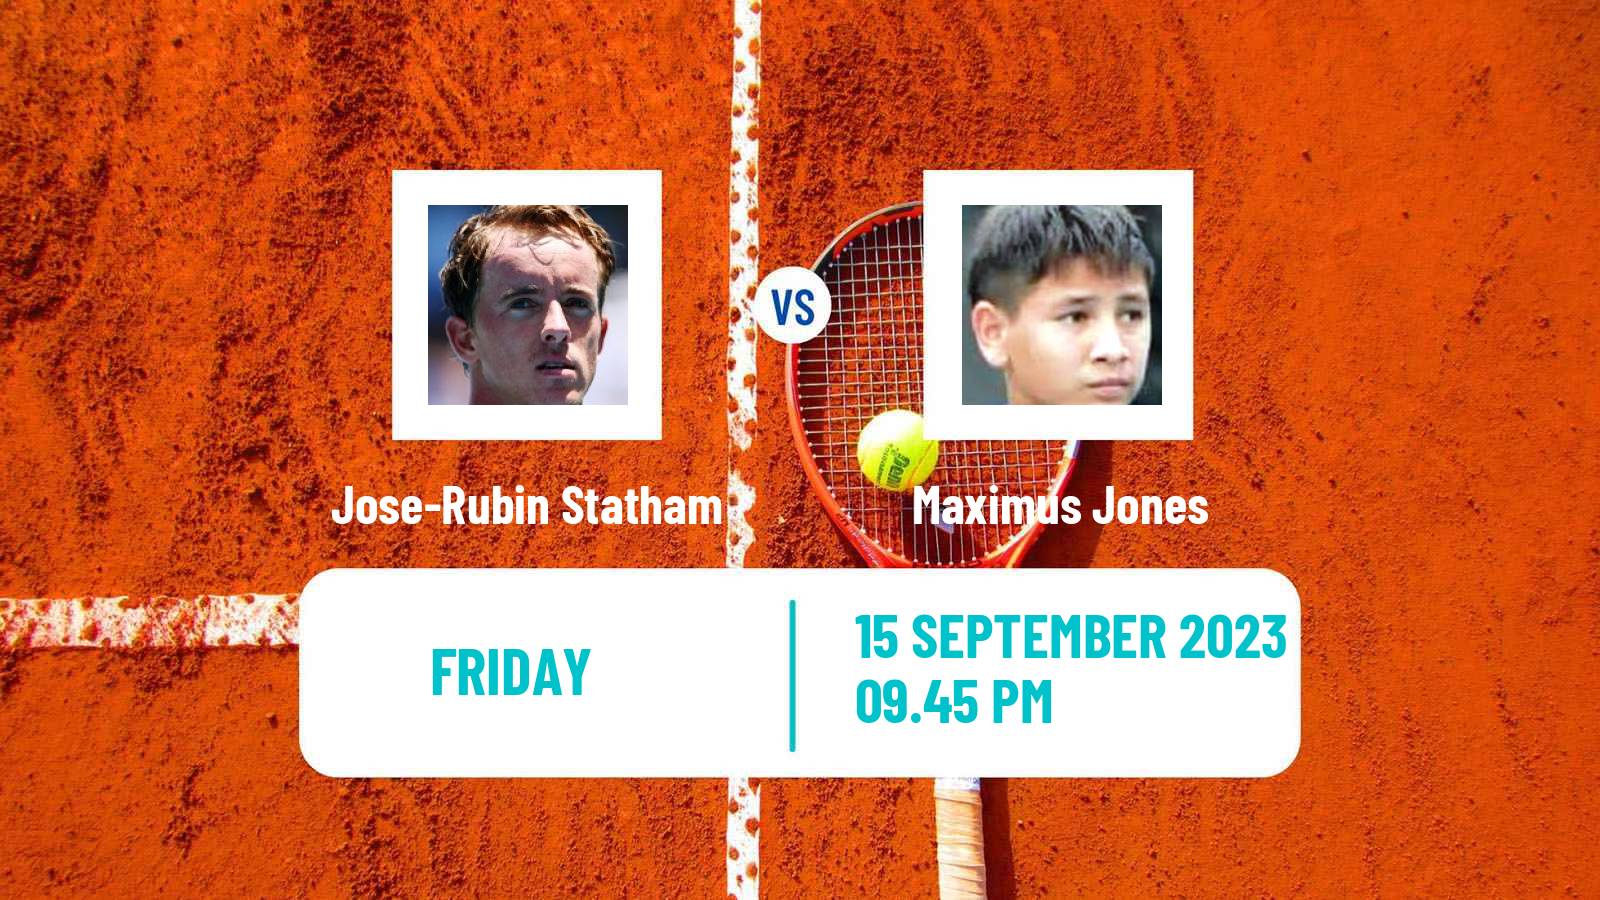 Tennis Davis Cup World Group II Jose-Rubin Statham - Maximus Jones